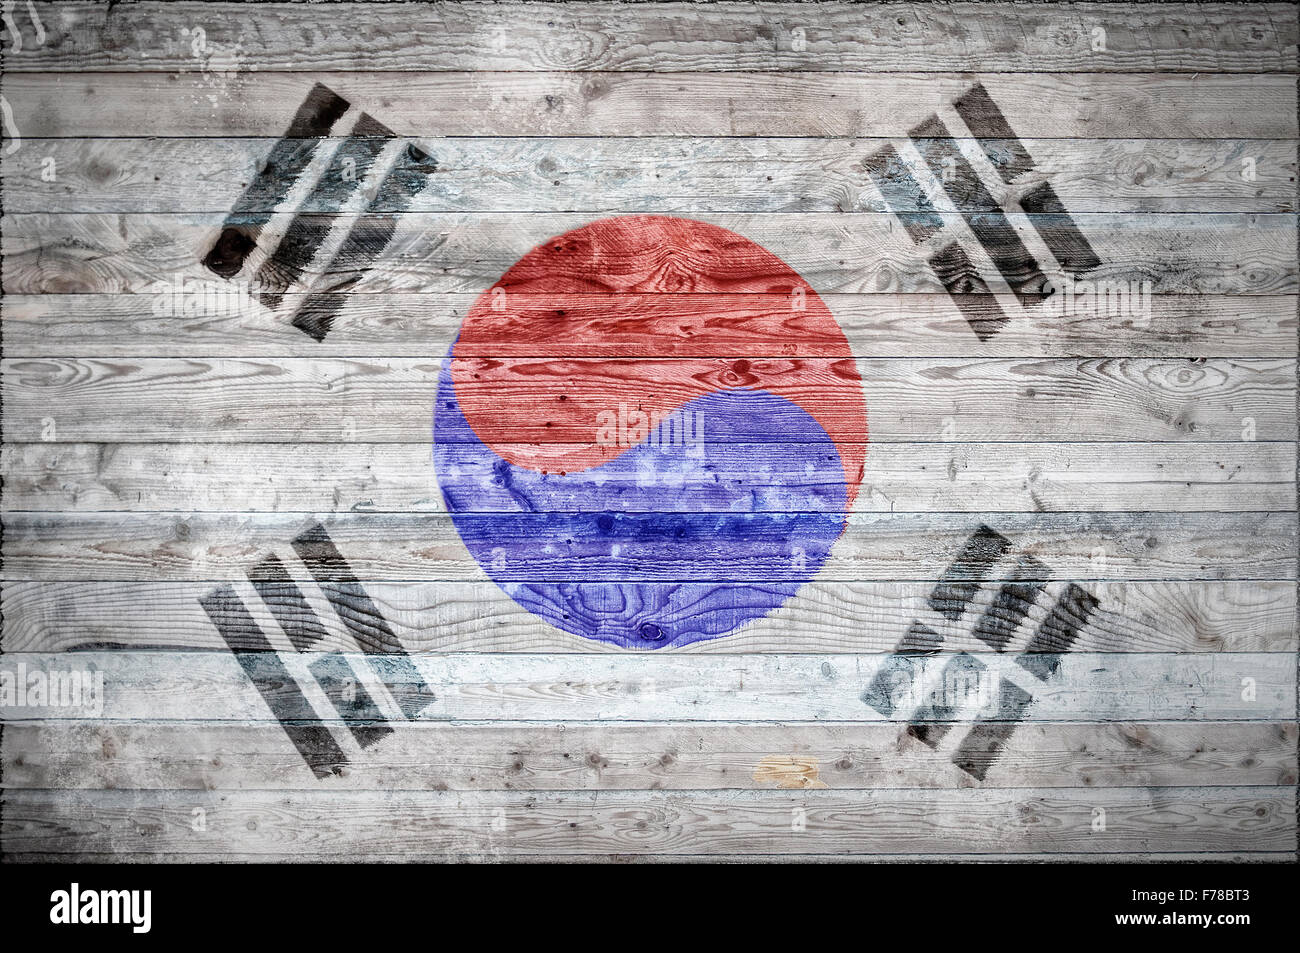 South Korea Wallpapers - Top 30 Best South Korea Wallpapers Download